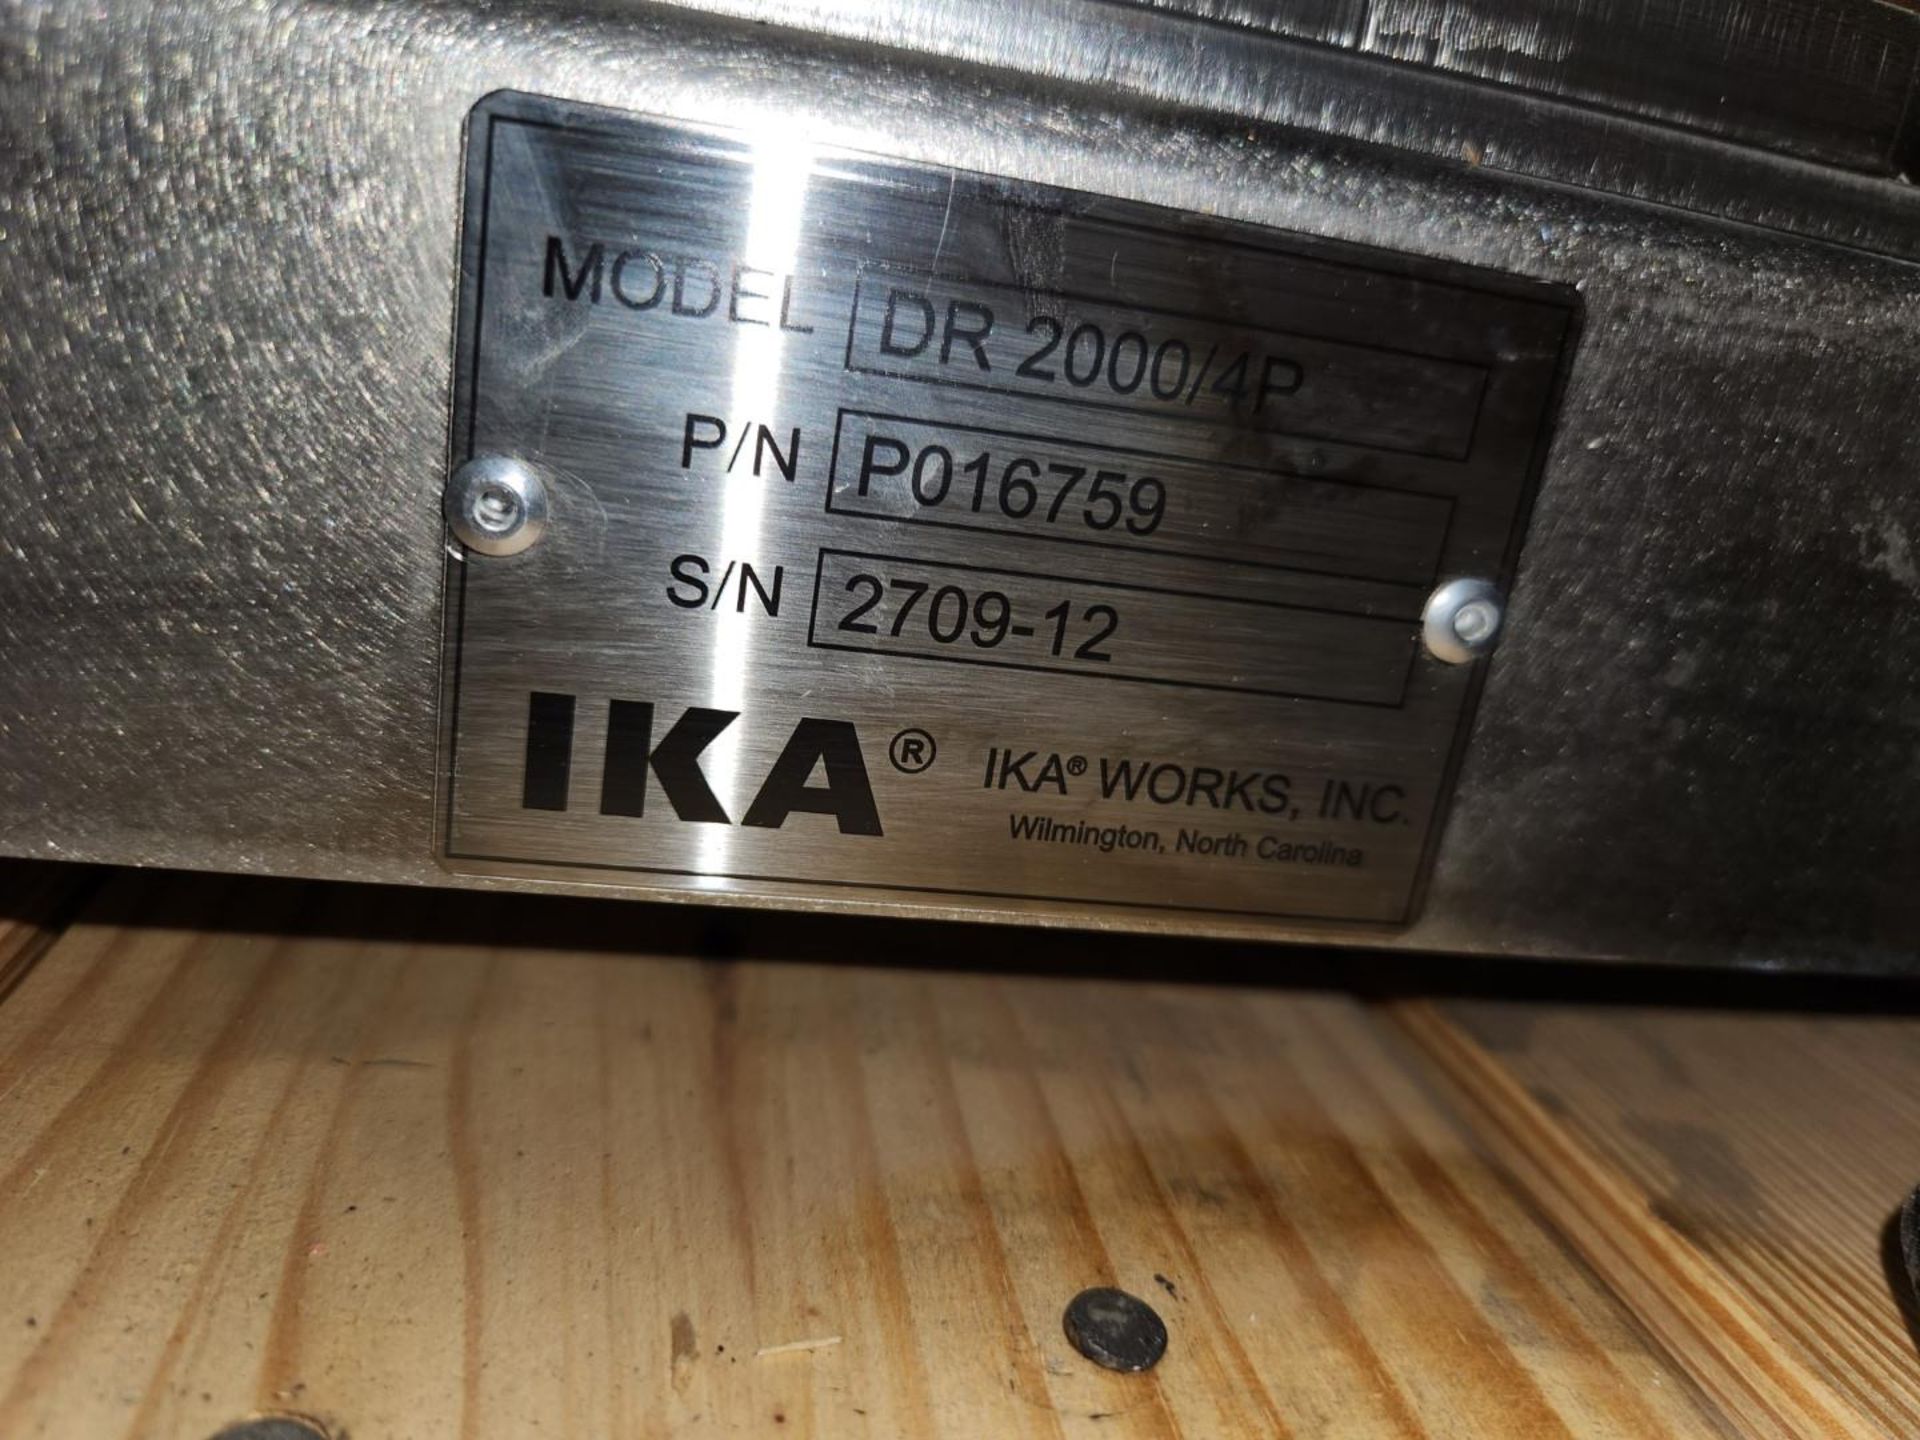 IKA Process Pilot Mill, Model DR 2000/4P - Image 5 of 13